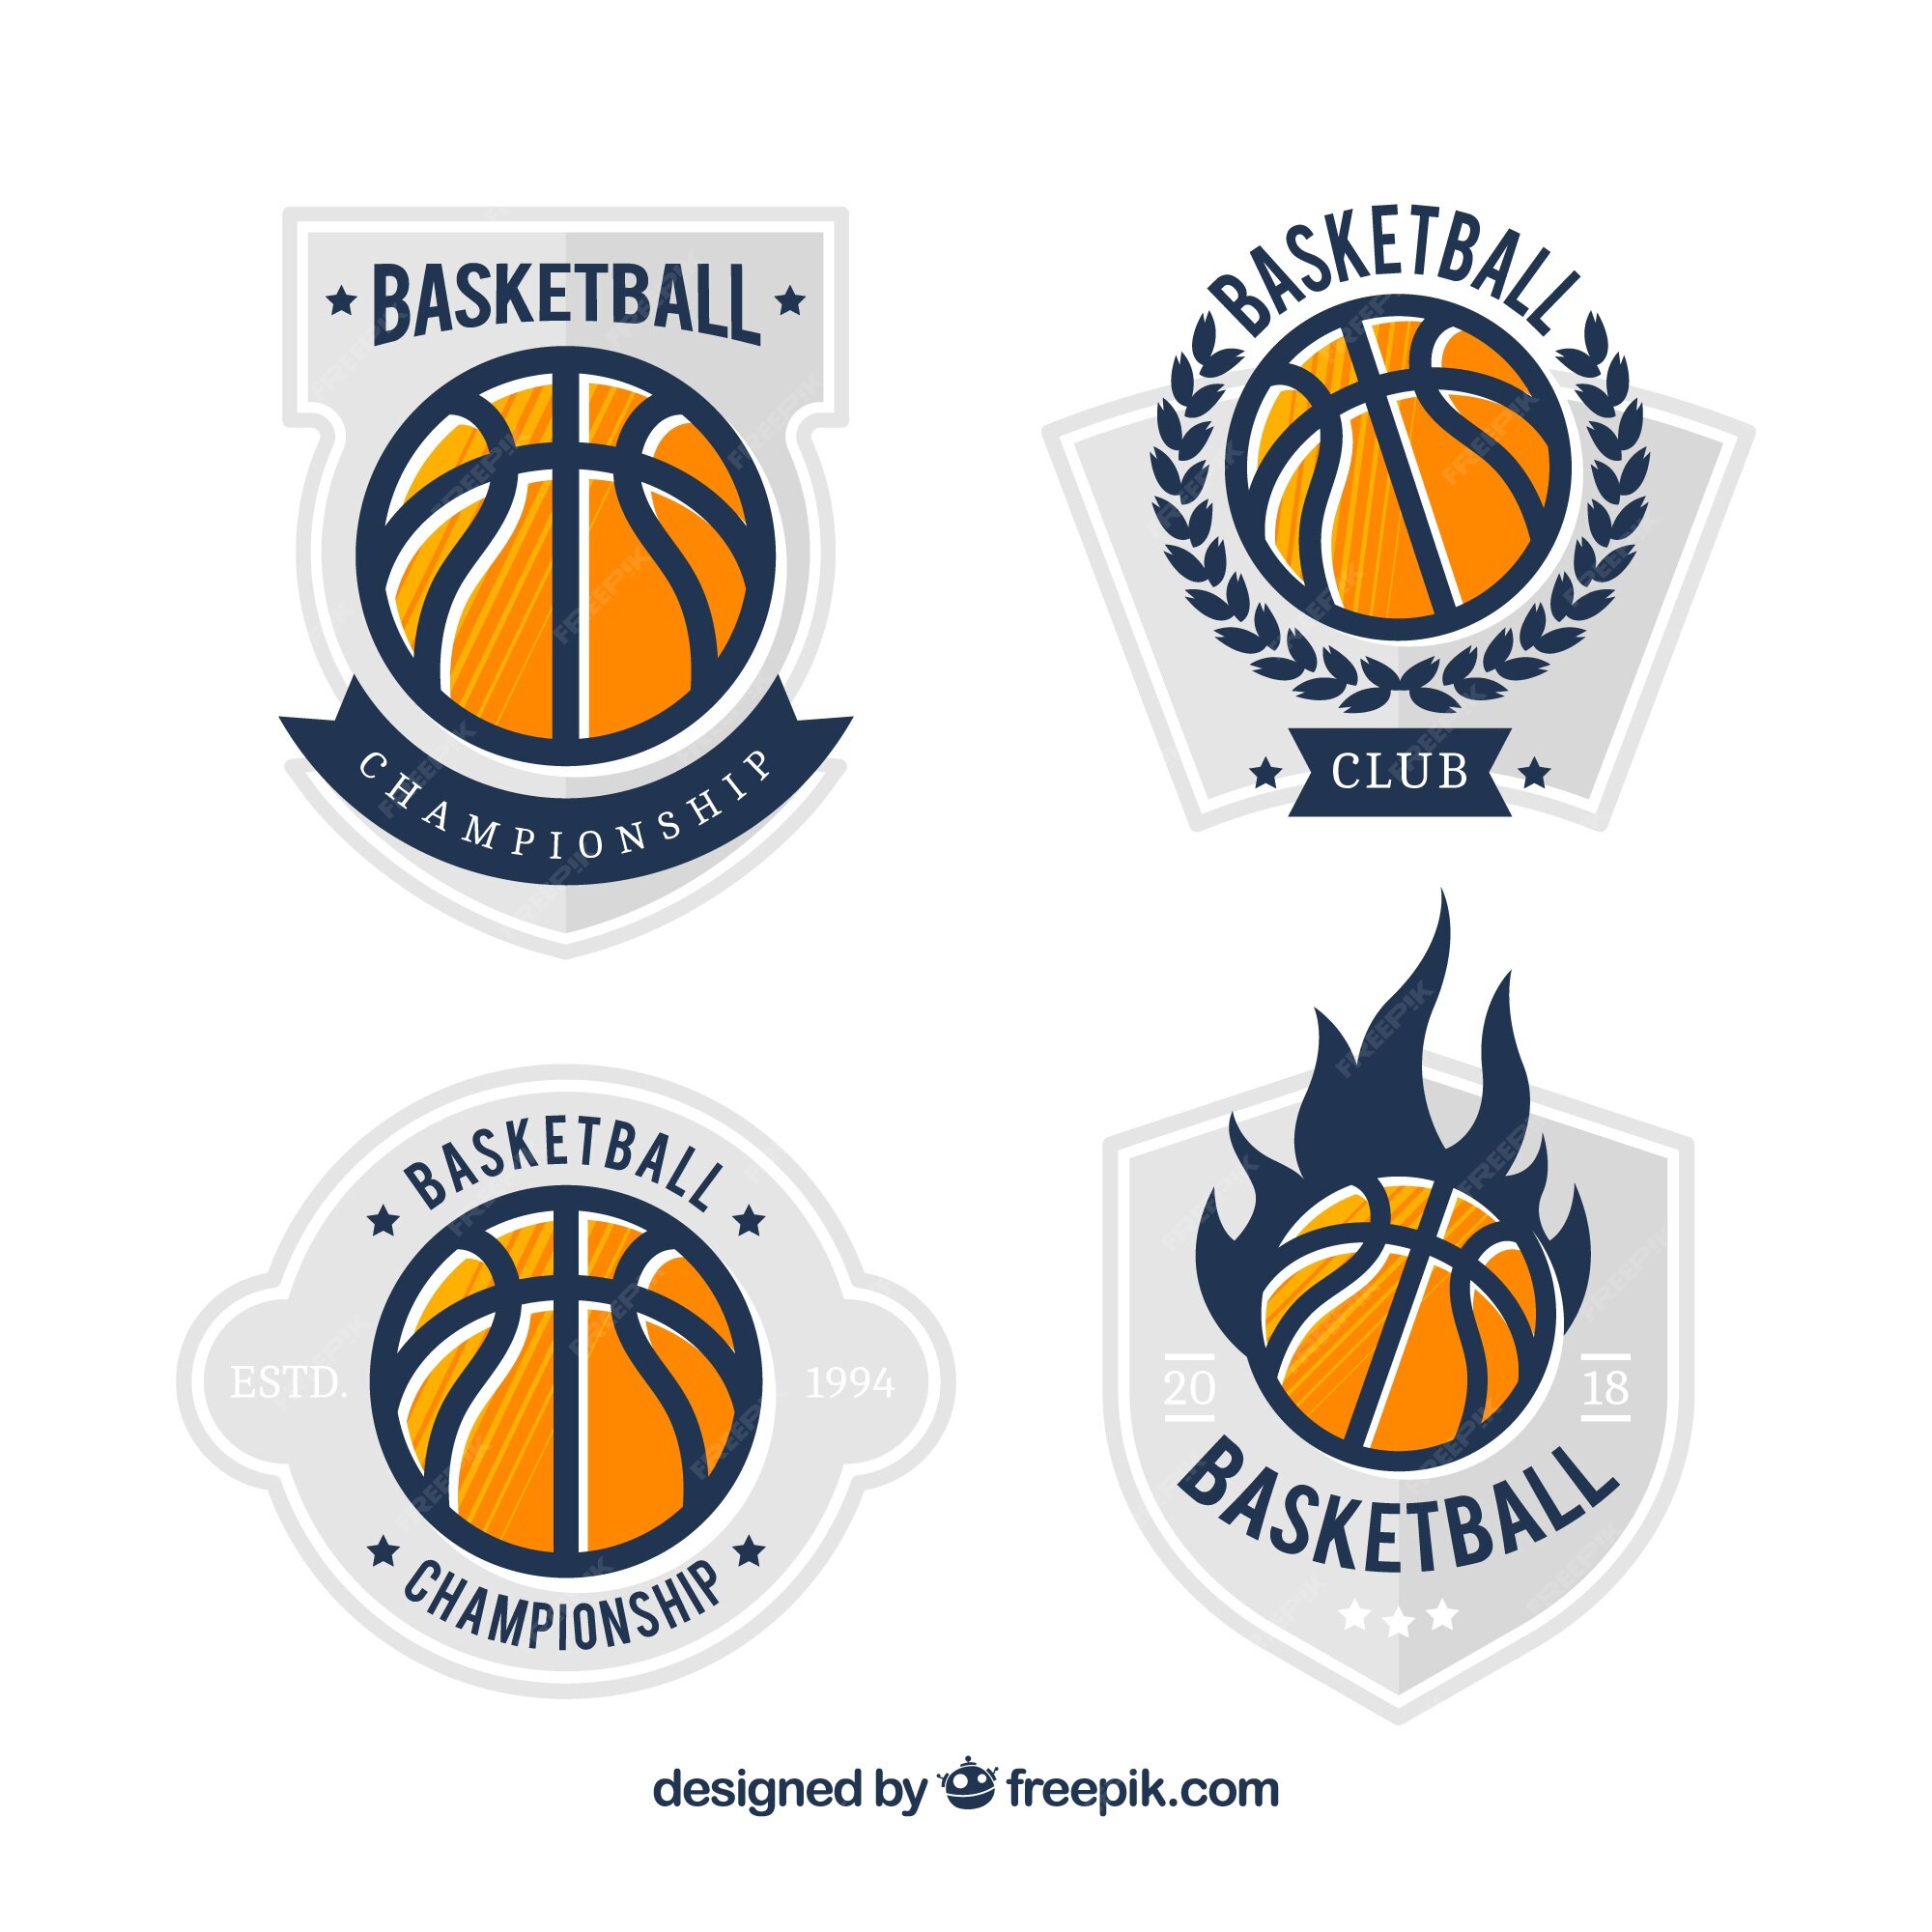 Page 2 | Basketball logo Vectors & Illustrations for Free Download | Freepik